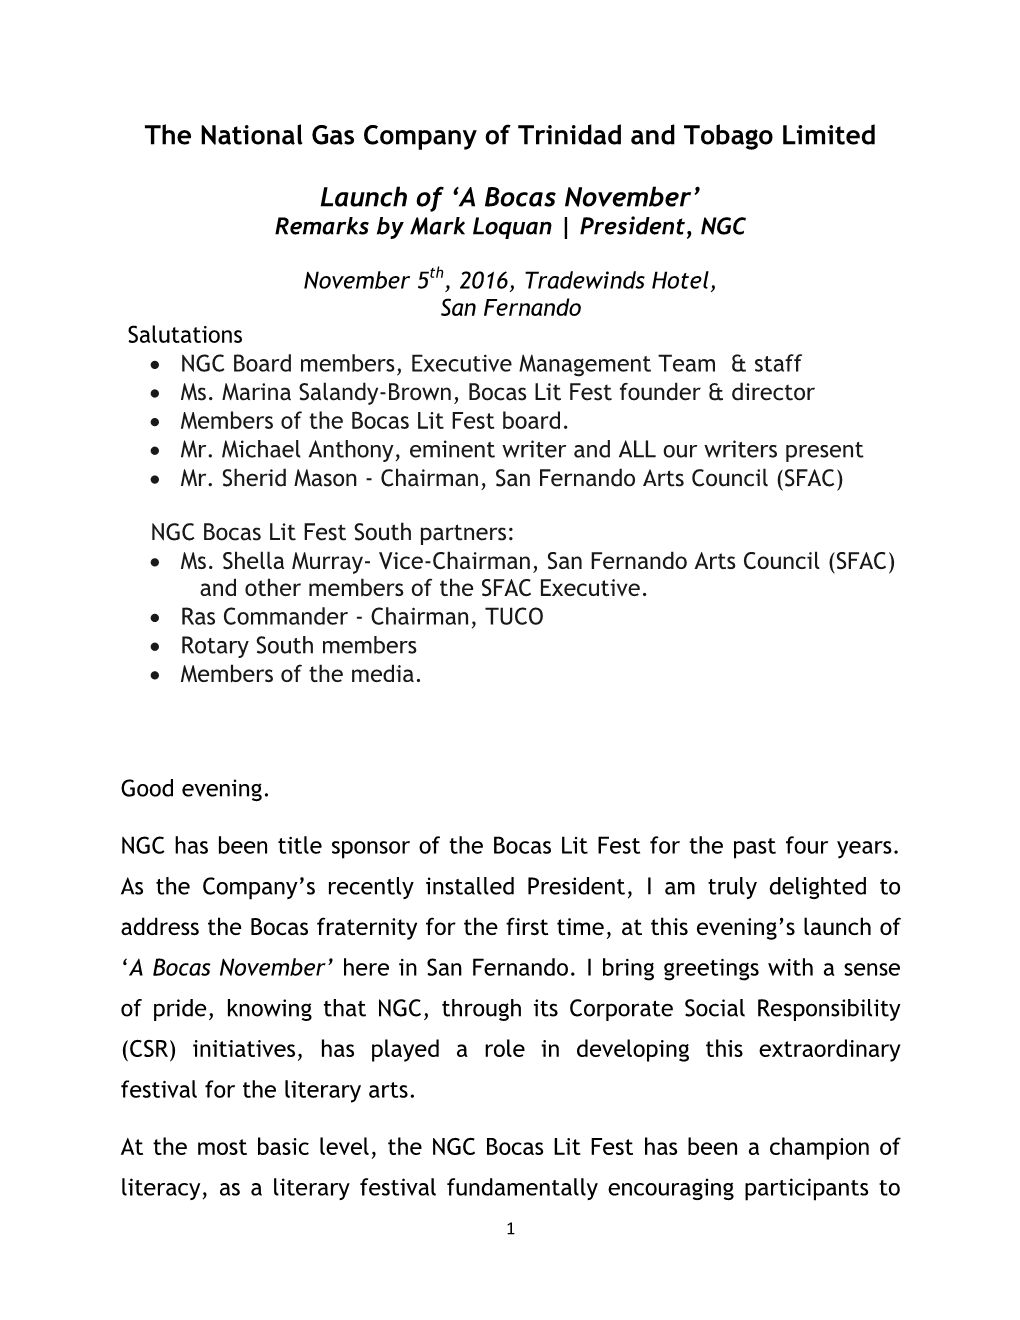 Launch of the NGC Bocas Lit Fest South